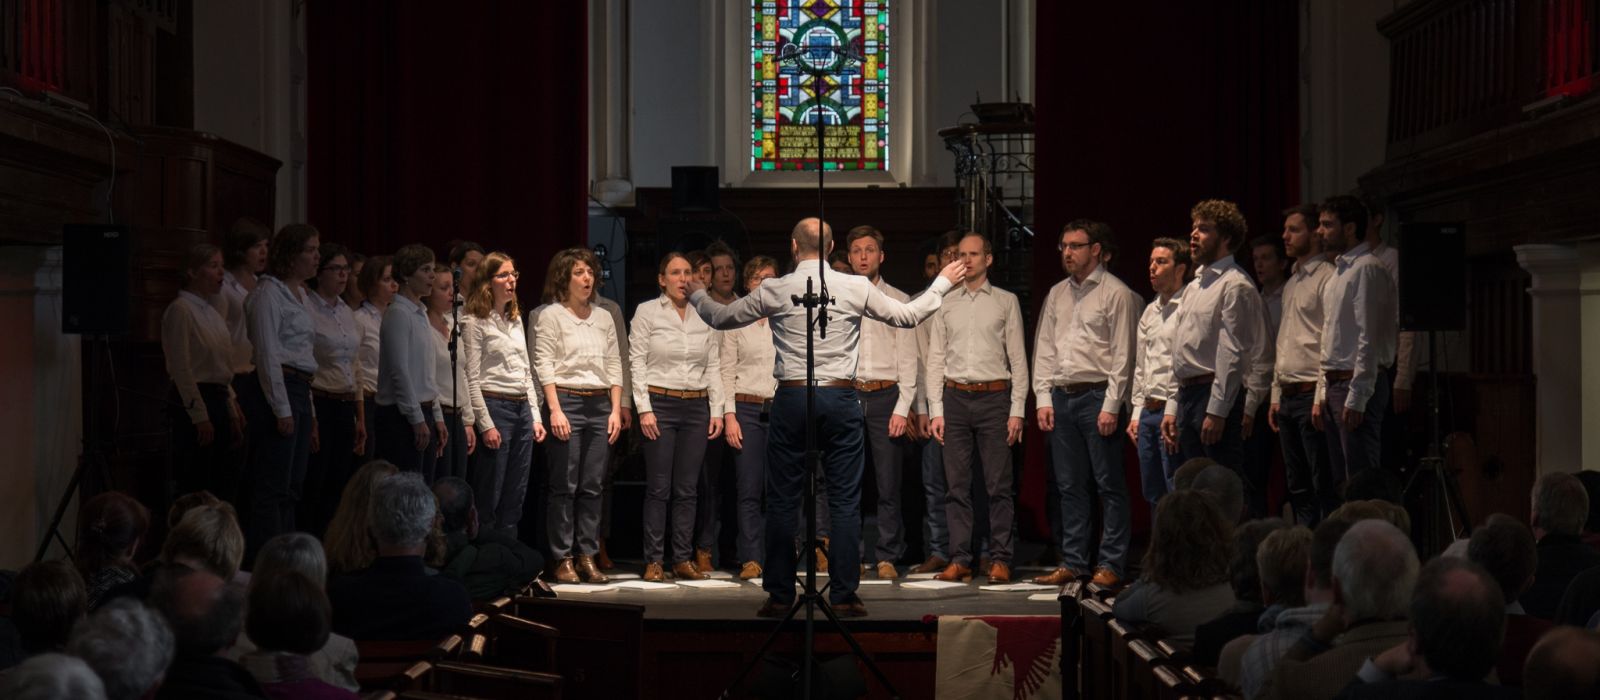 Choir tours by Discover Ireland Tours Destination Management Company